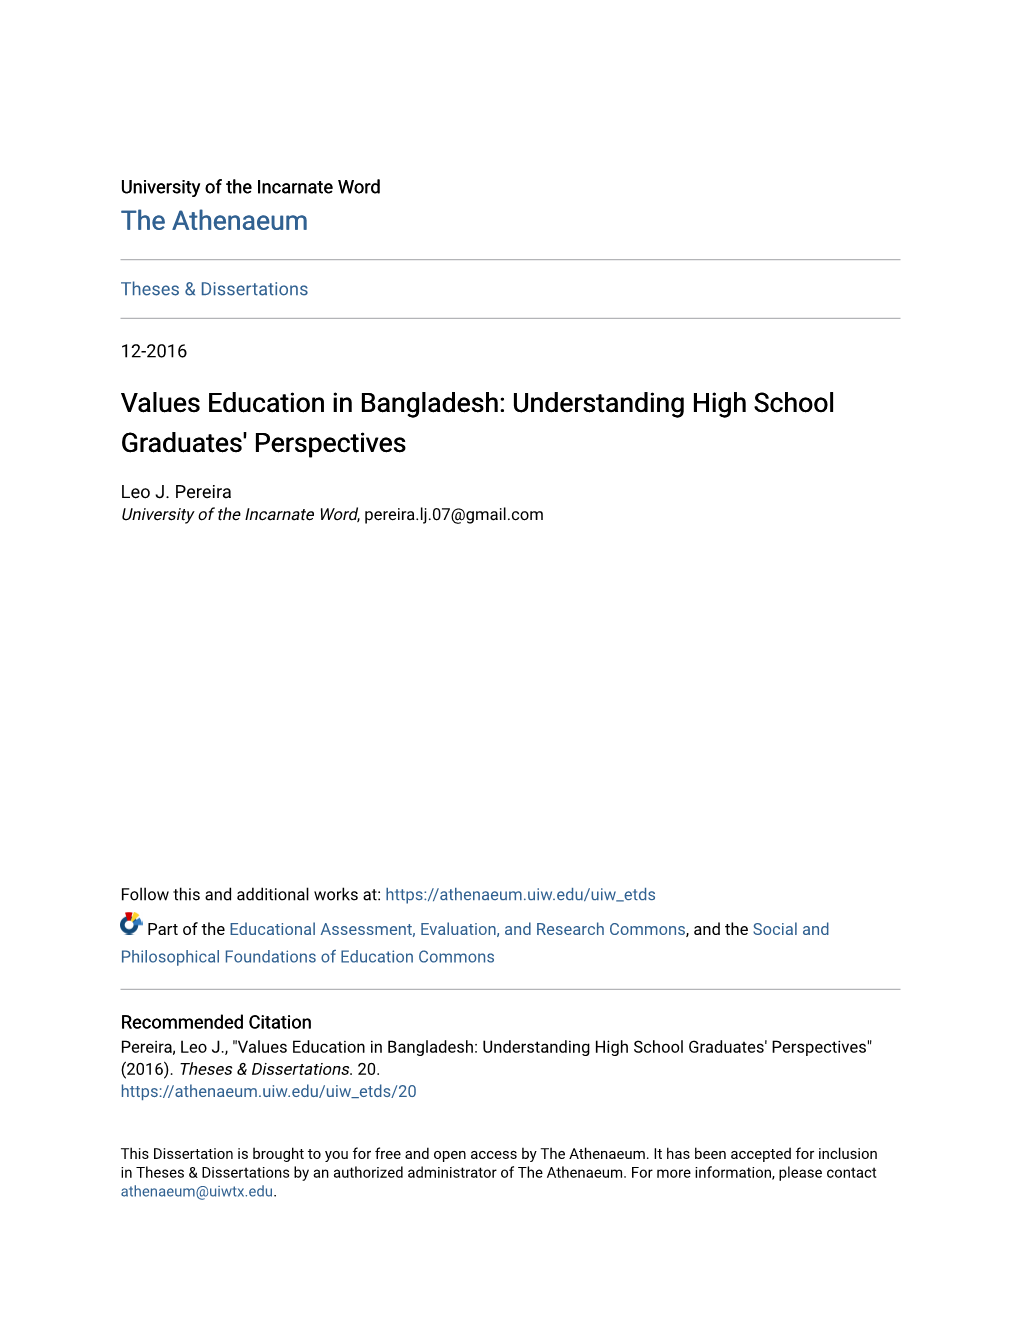 Values Education in Bangladesh: Understanding High School Graduates' Perspectives